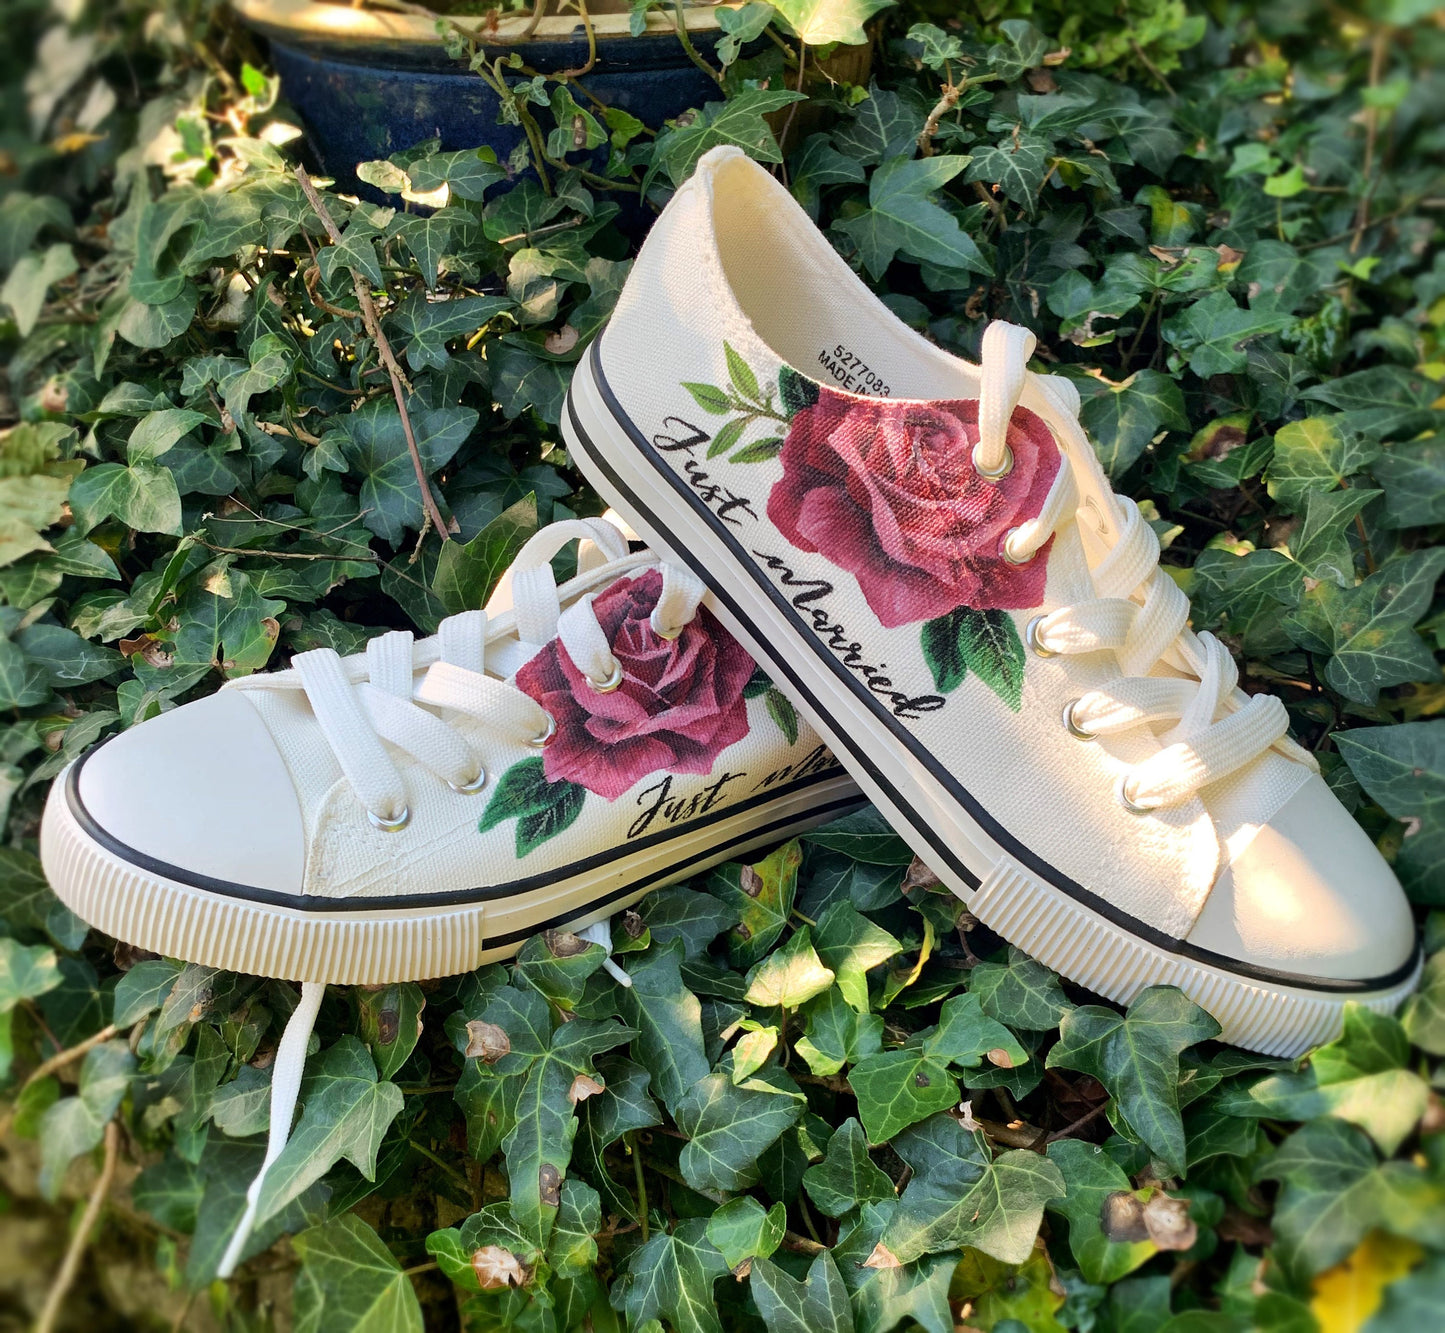 Wedding Converse, personalised wedding shoes (Converse, Vans or similar)